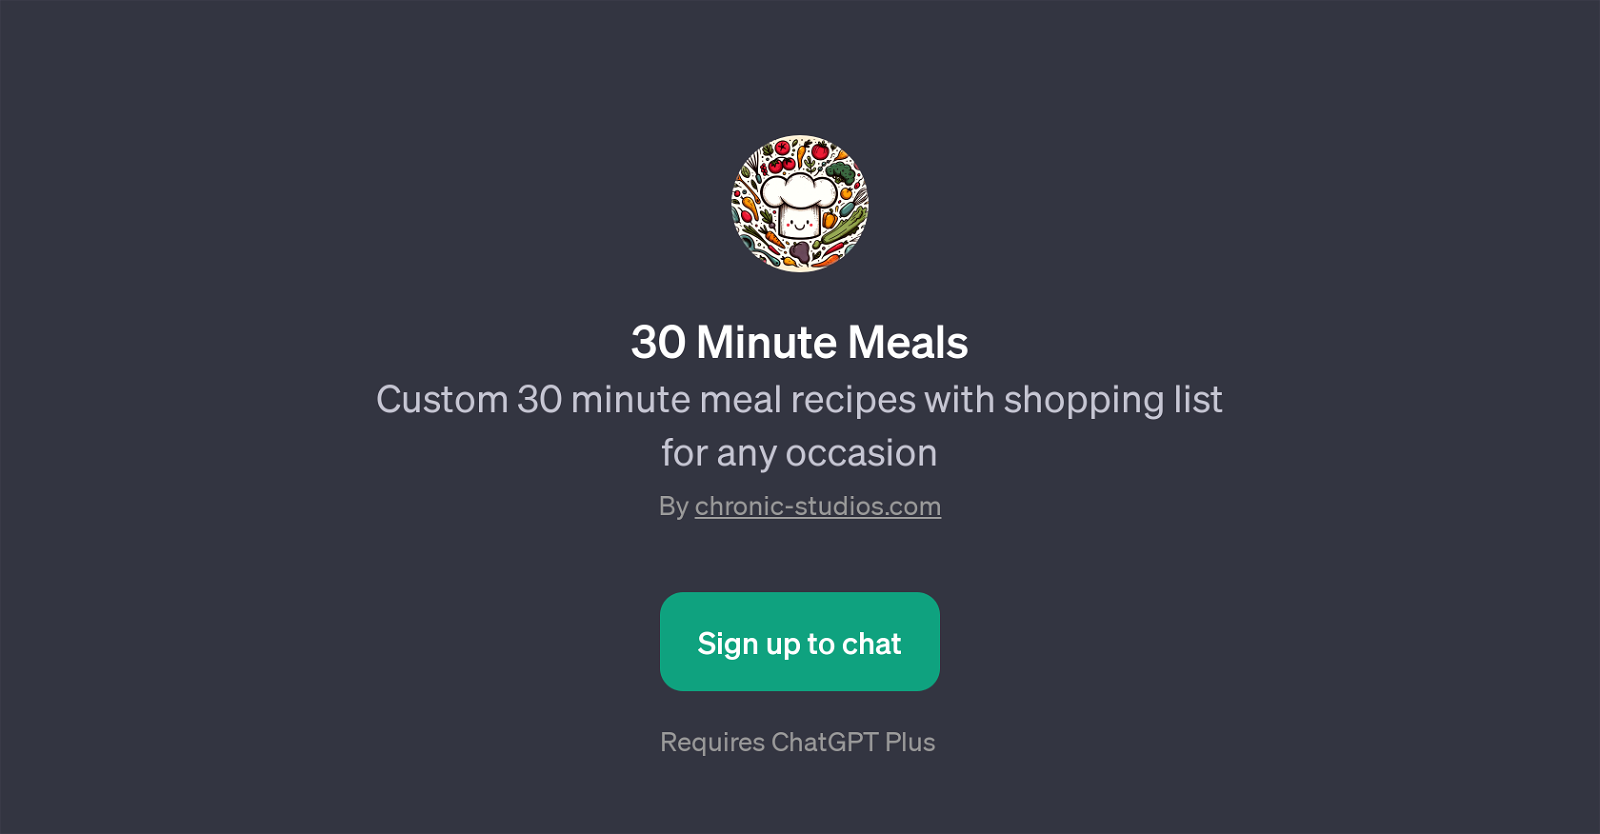 30 Minute Meals website